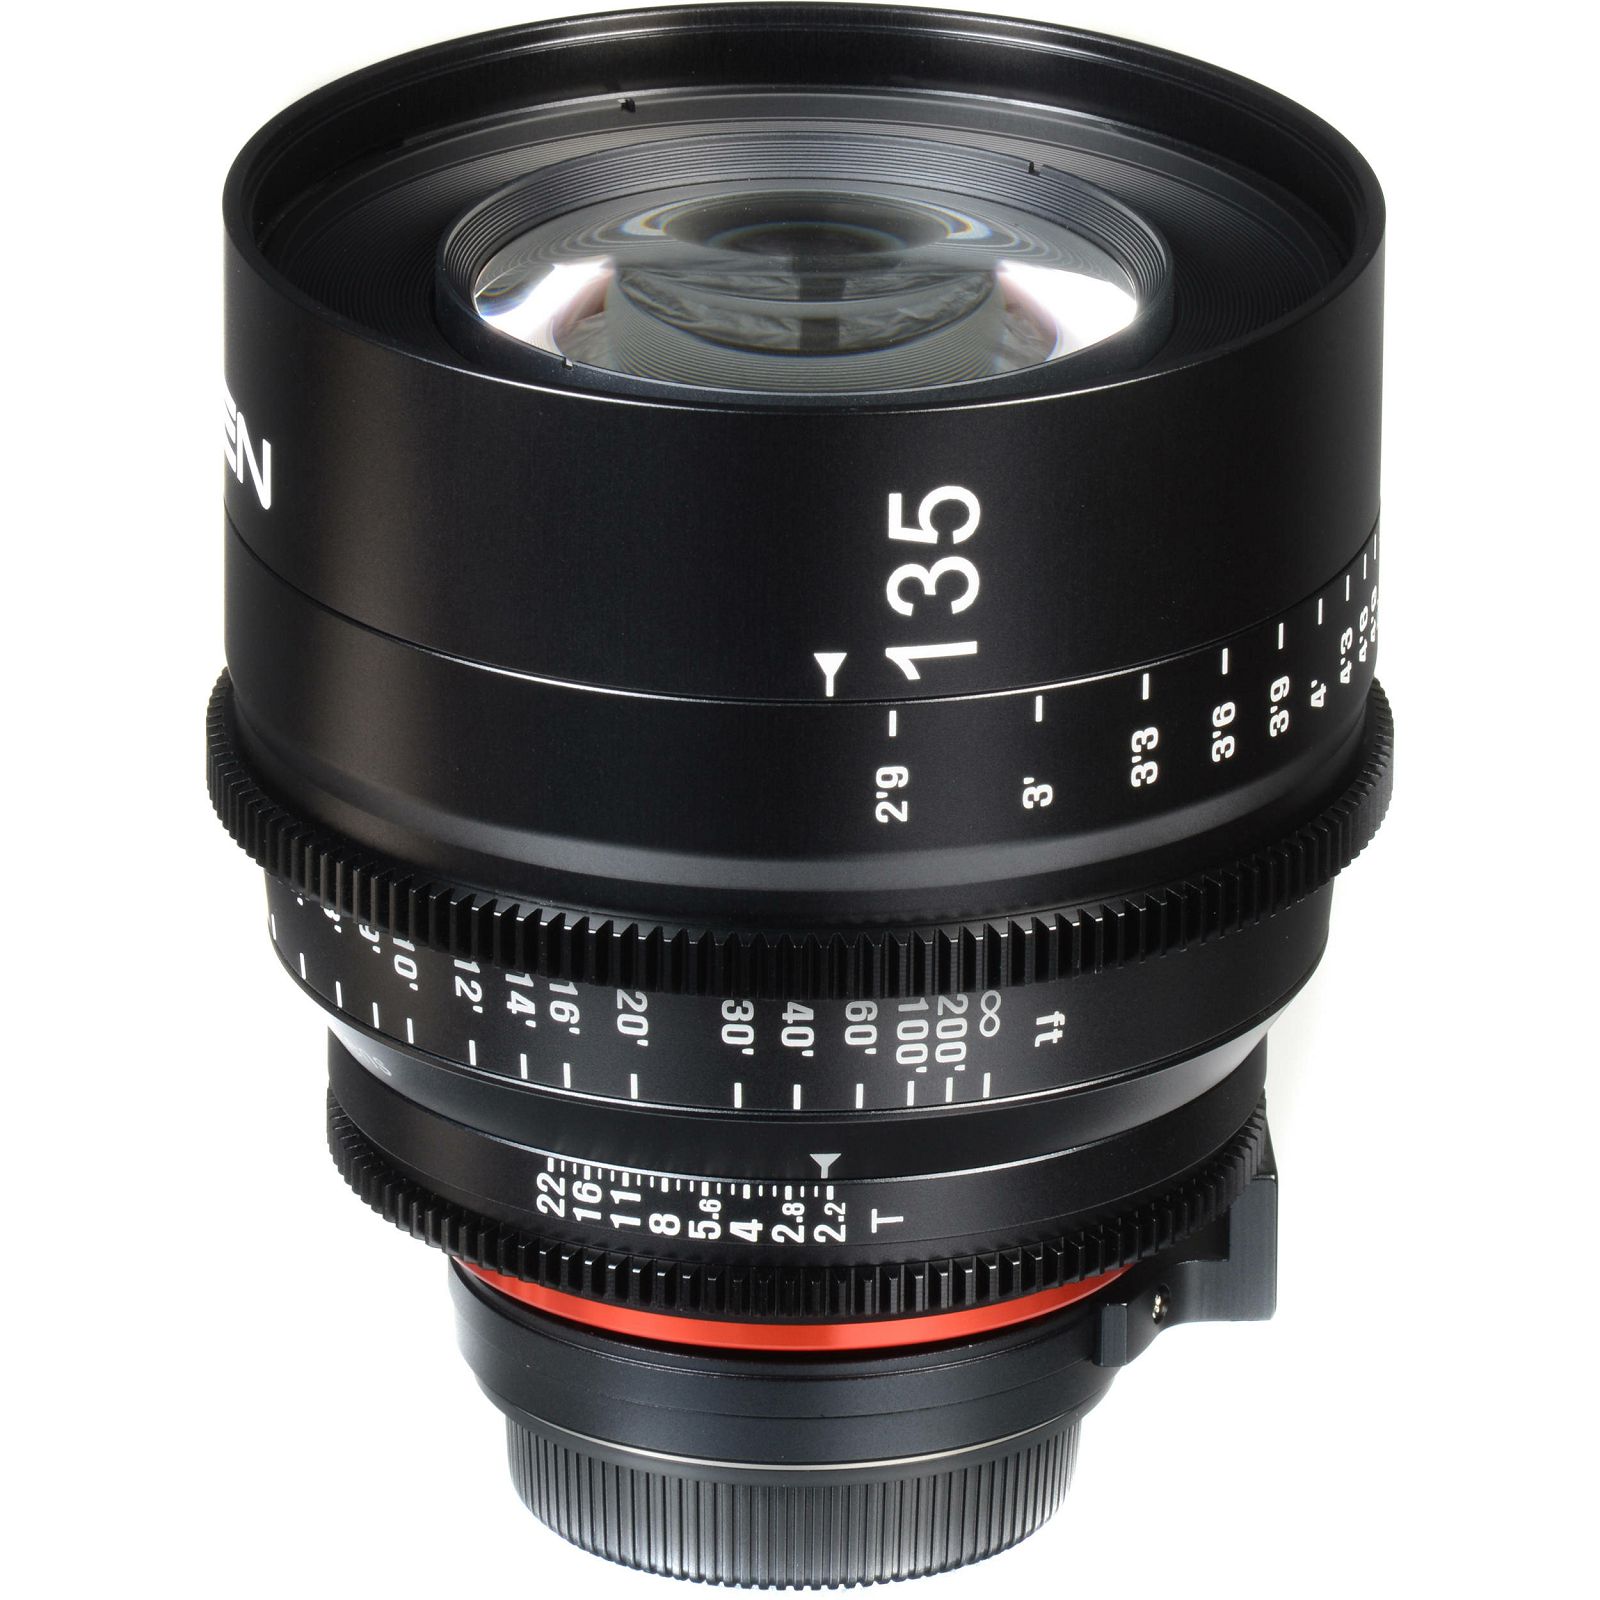 Samyang XEEN 135mm T2.2 Cine Lens Sony E VDSLR Cinema video filmski telefoto objektiv